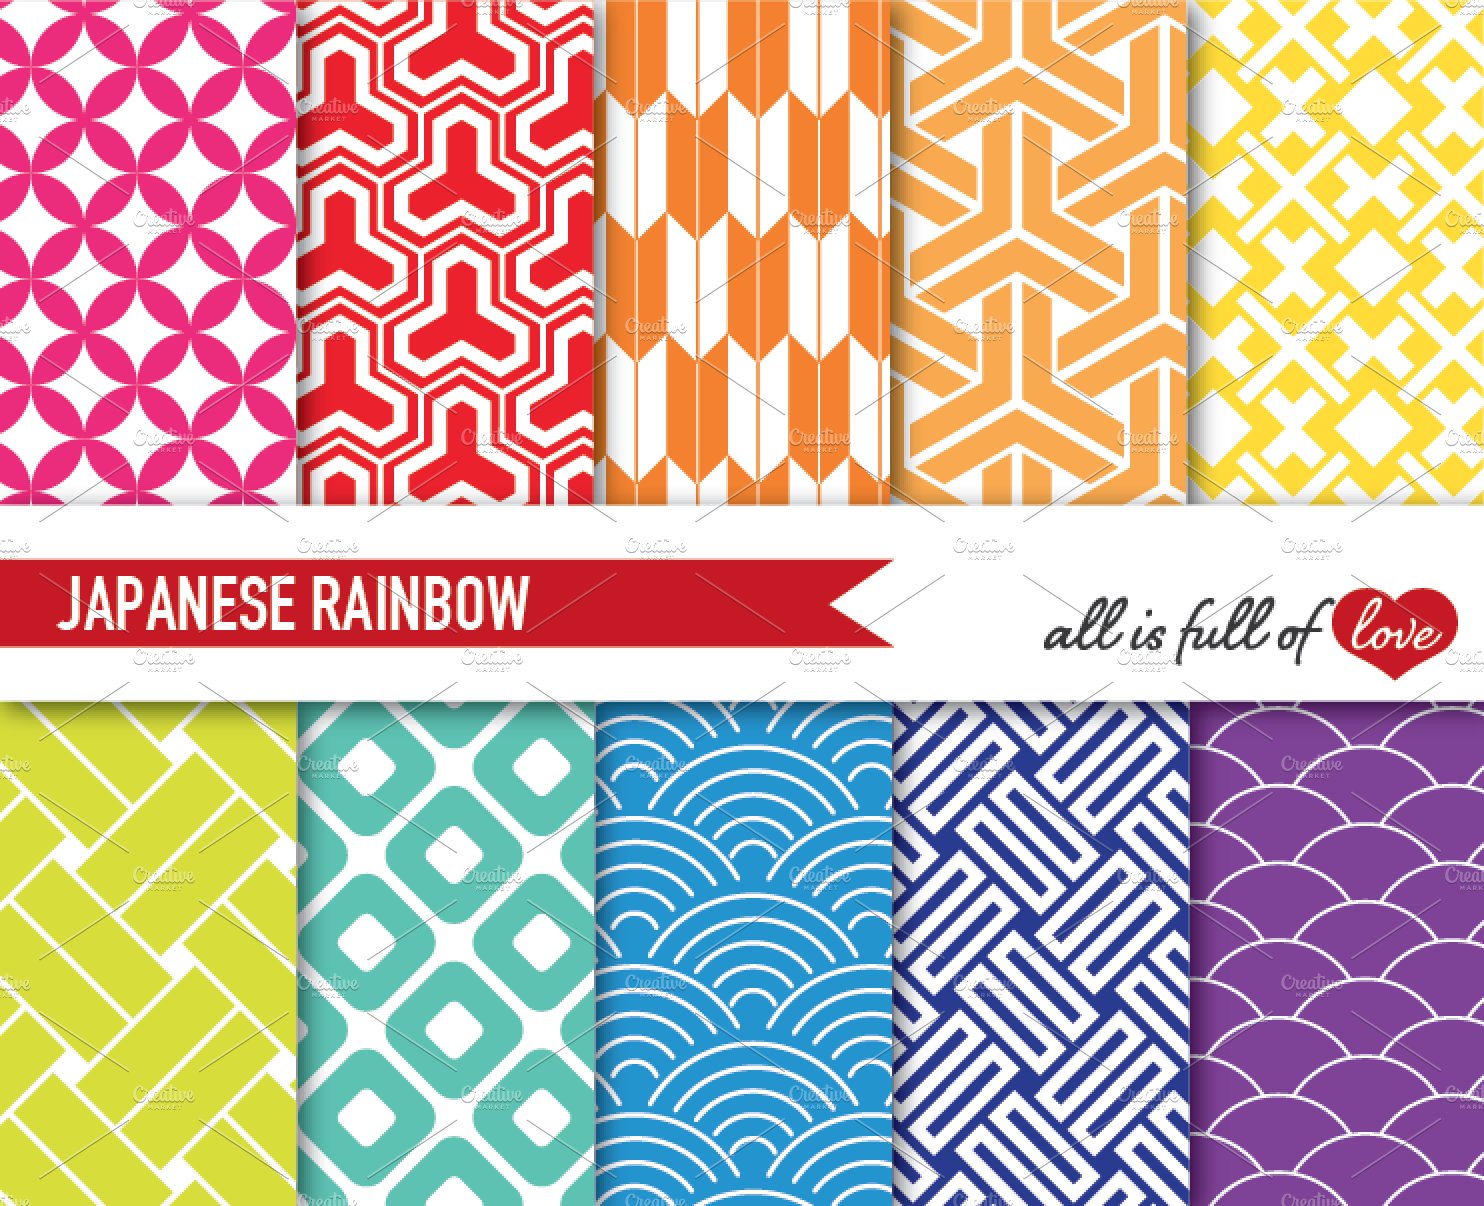 Rainbow Geometric Backgrounds Kit cover image.